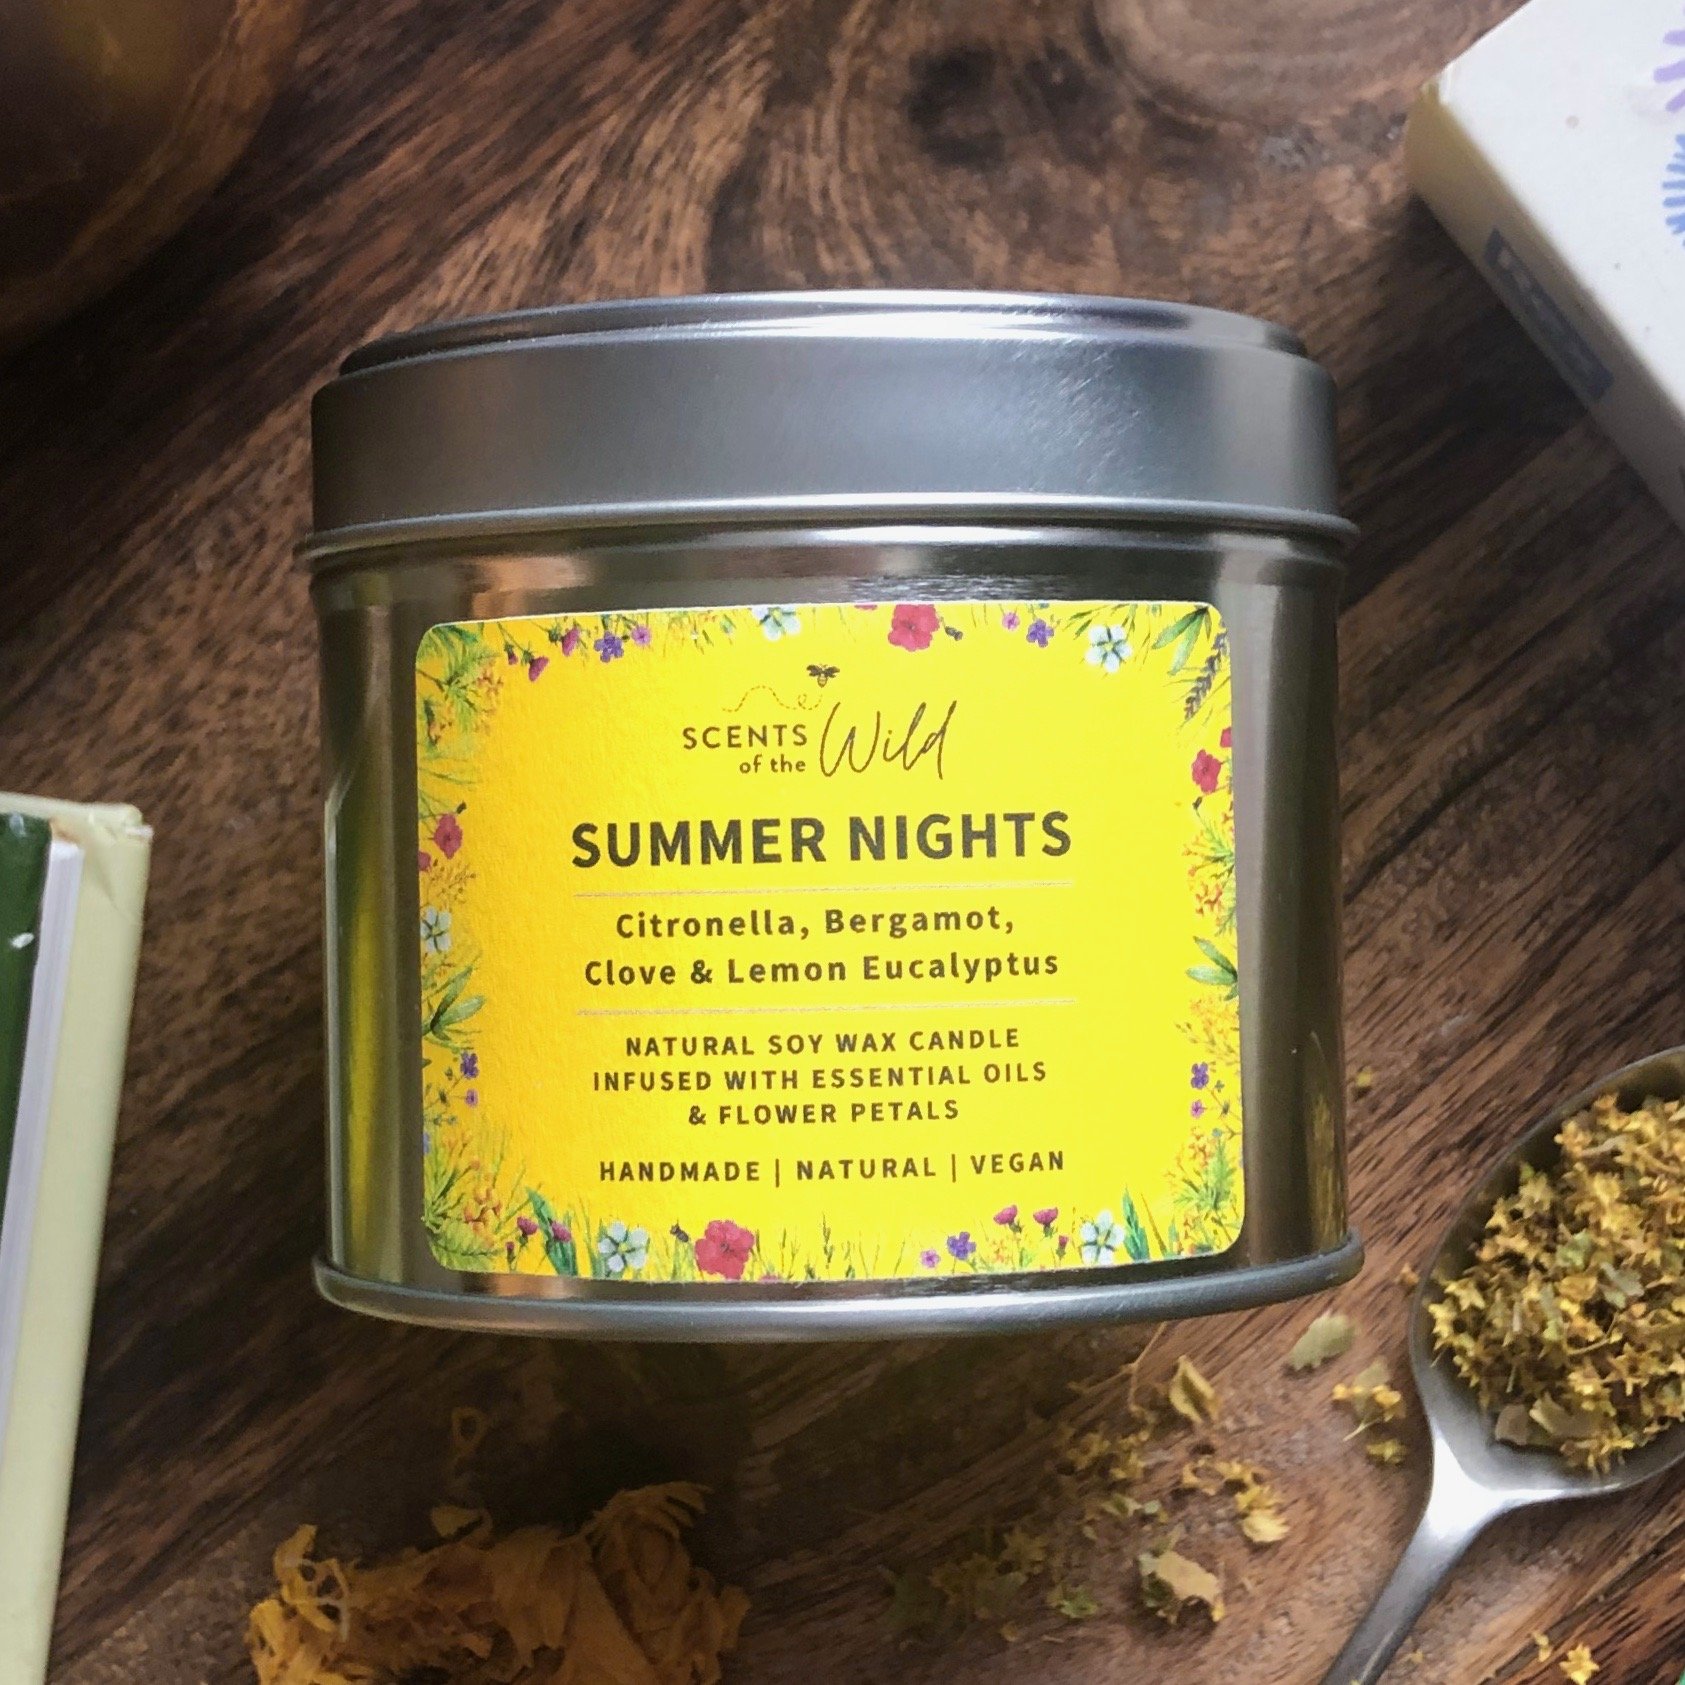 Summer Nights candle tin yellow label flat lay.jpg